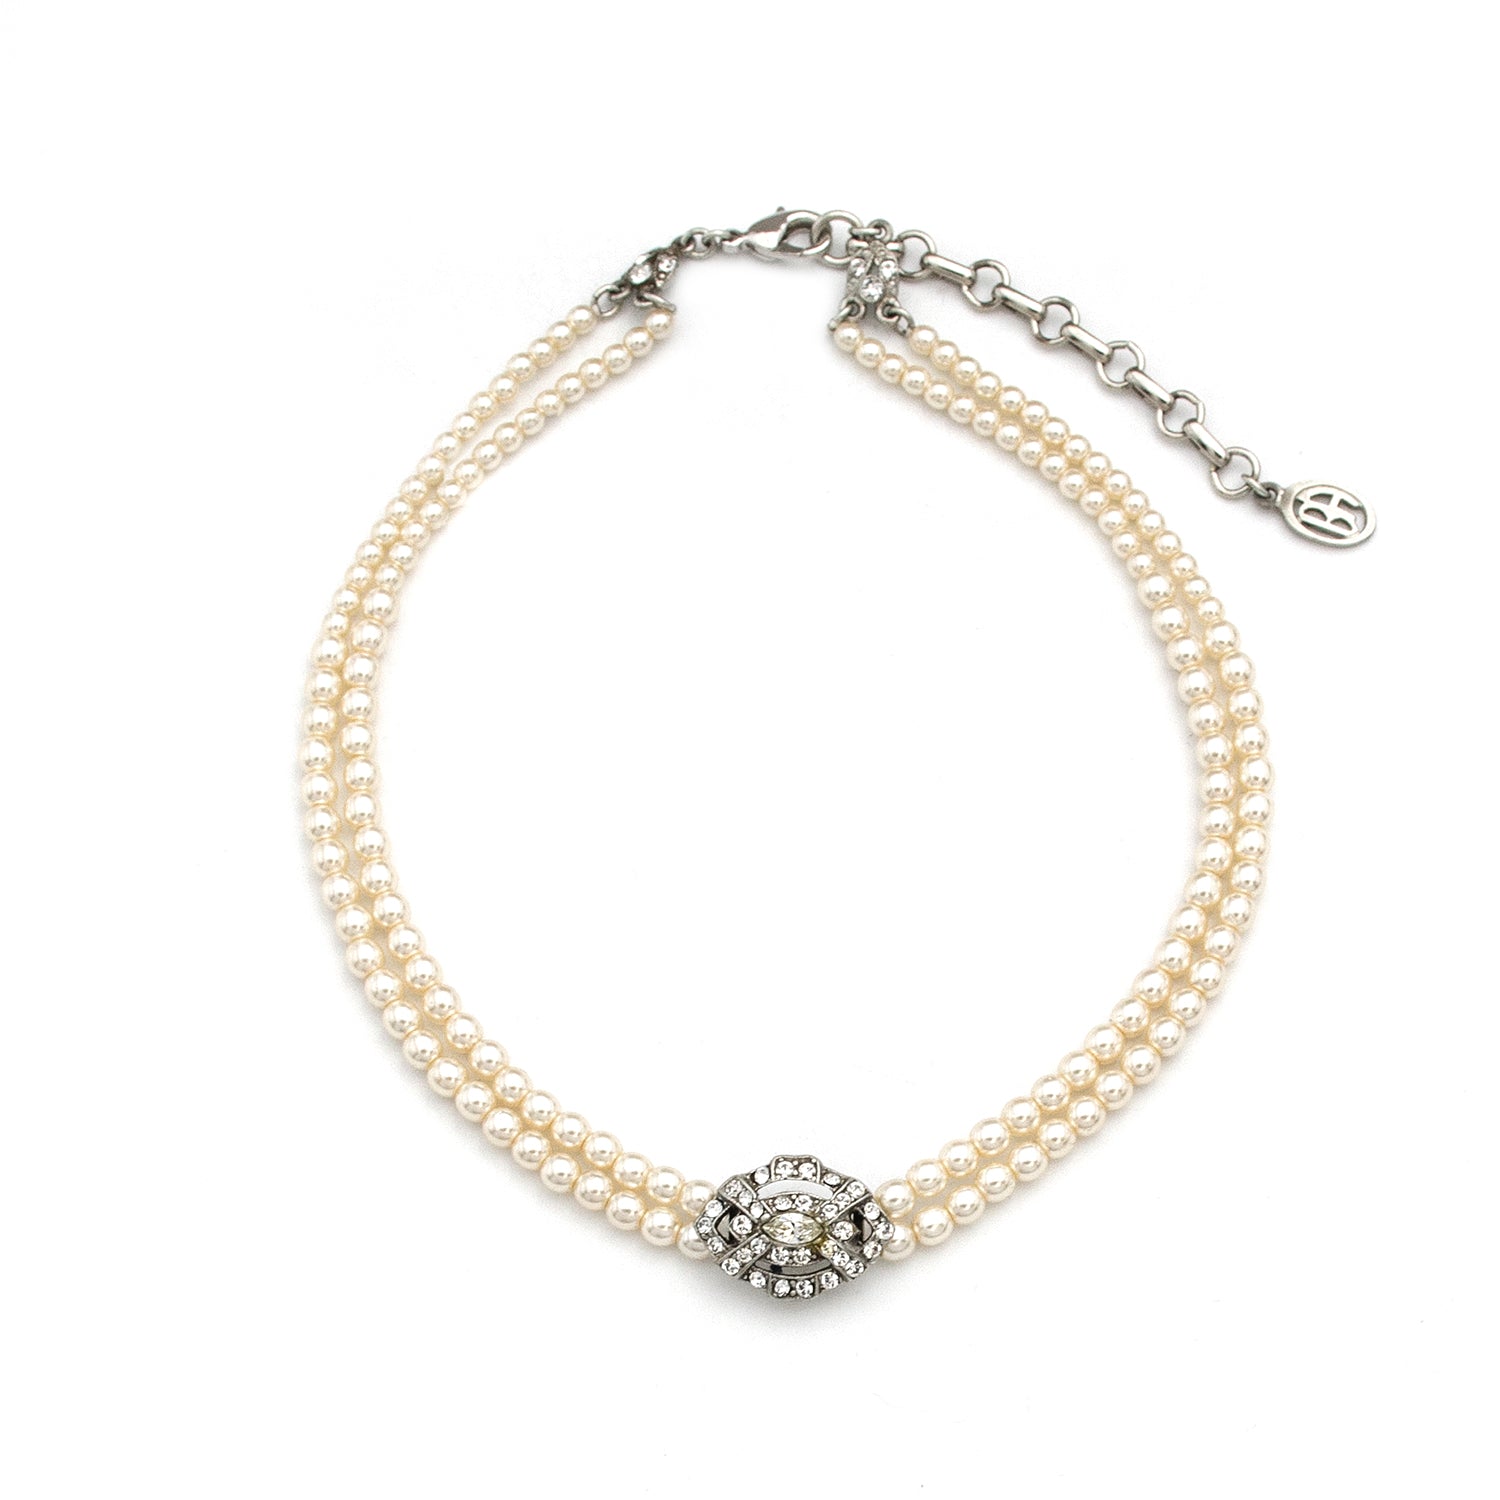 Chanel Seven-Strand Pearl Choker Necklace - Chanel